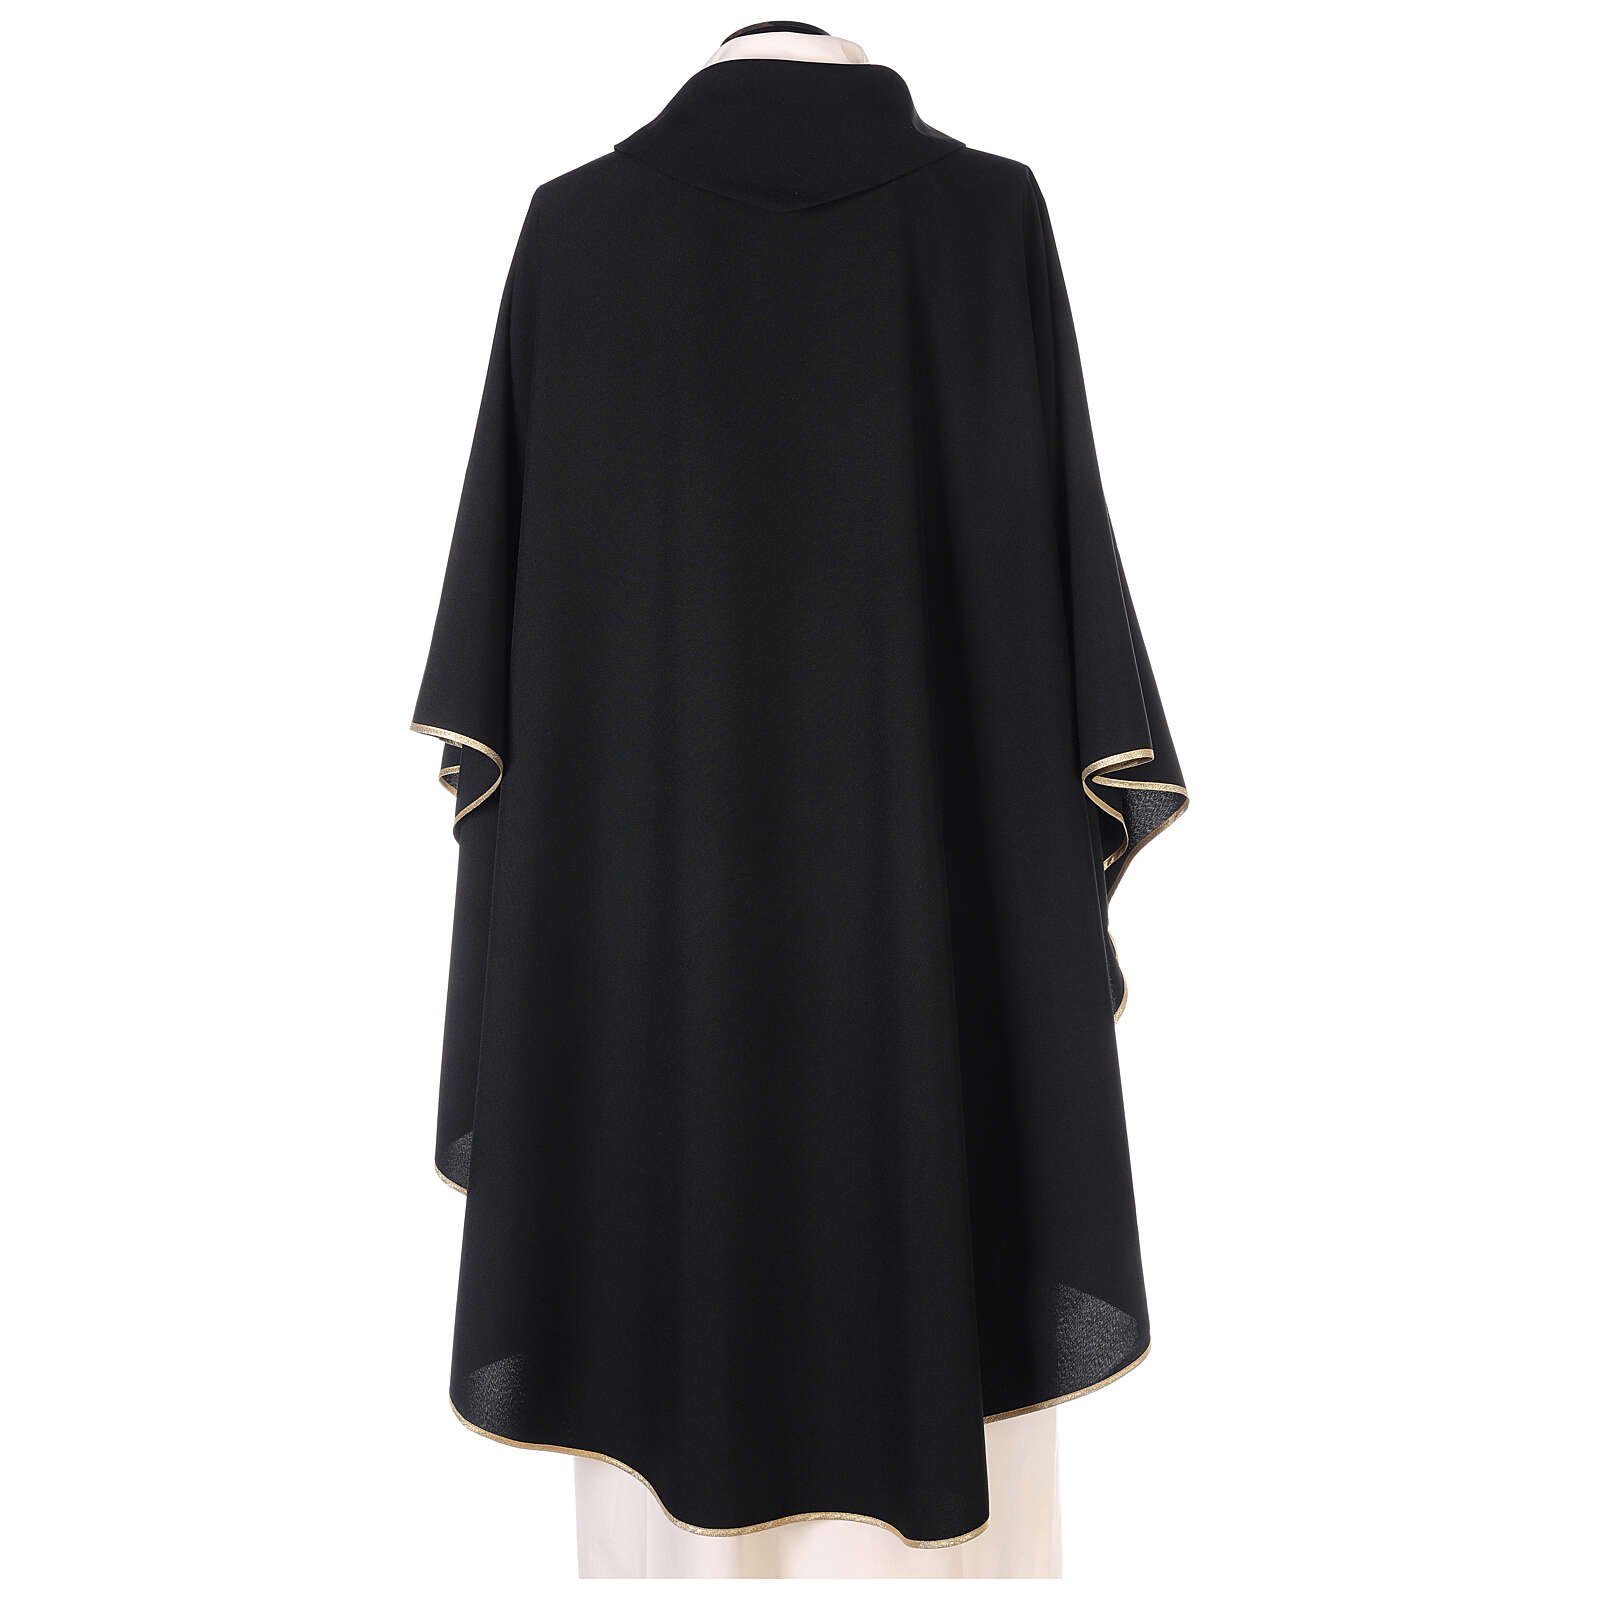 Plain black chasuble, 100% polyester | online sales on HOLYART.com